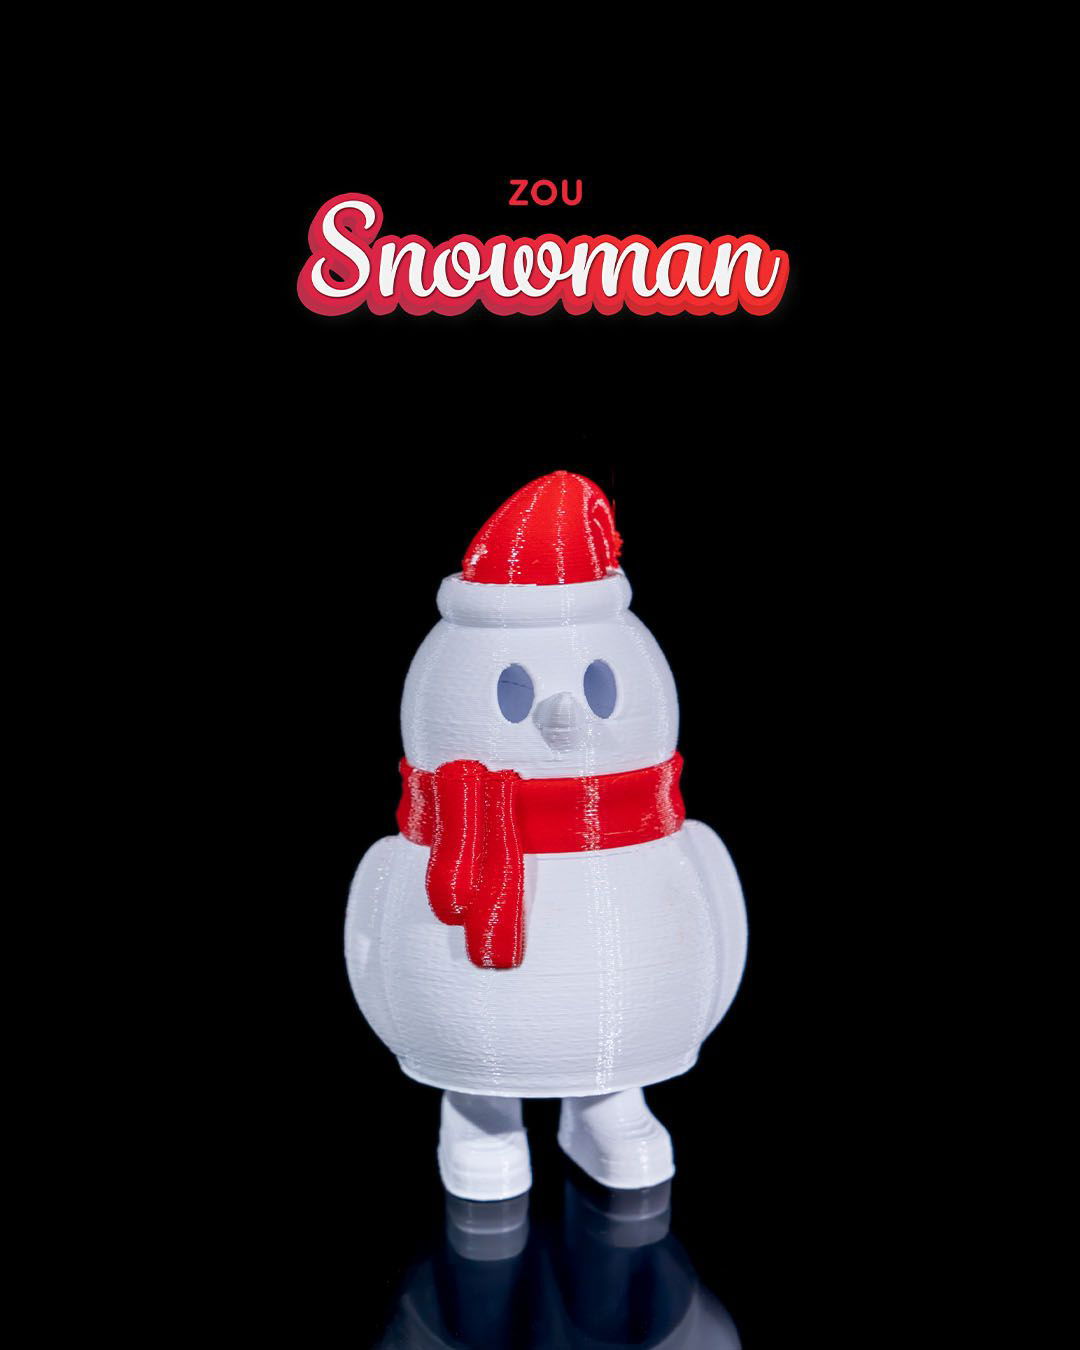 Snowman 2938